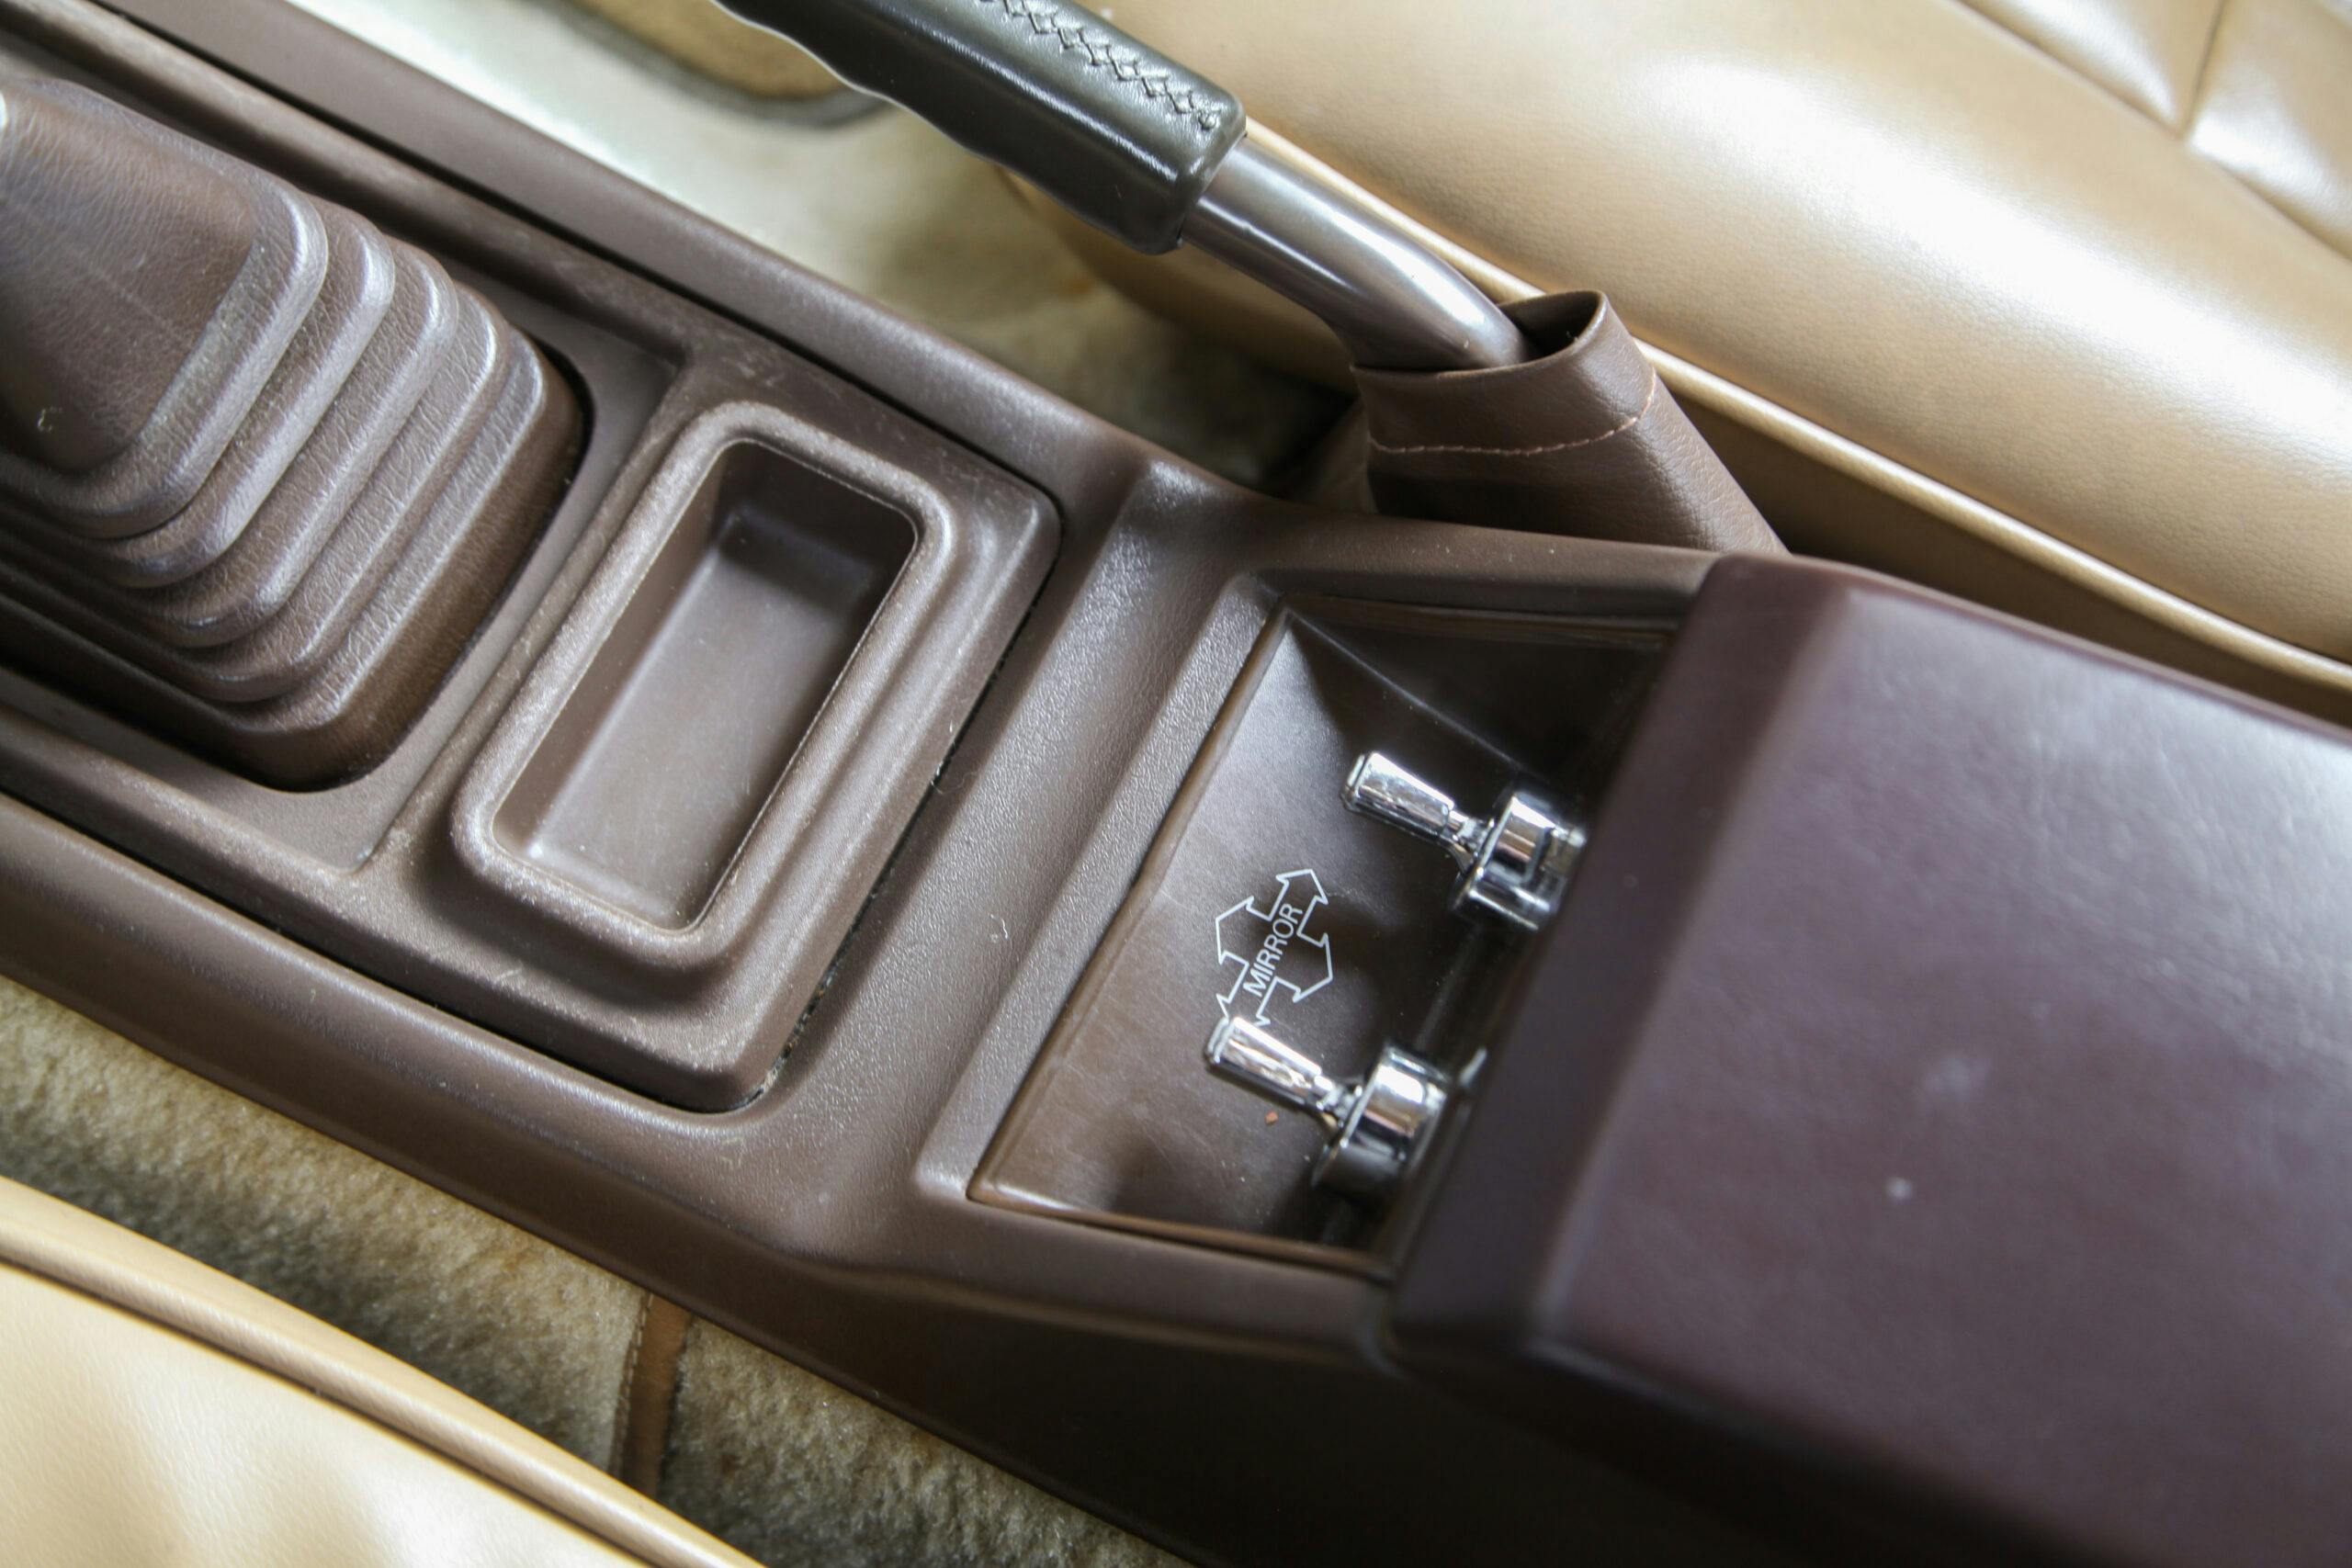 1981 Datsun 280ZX interior center console mirror adjusment